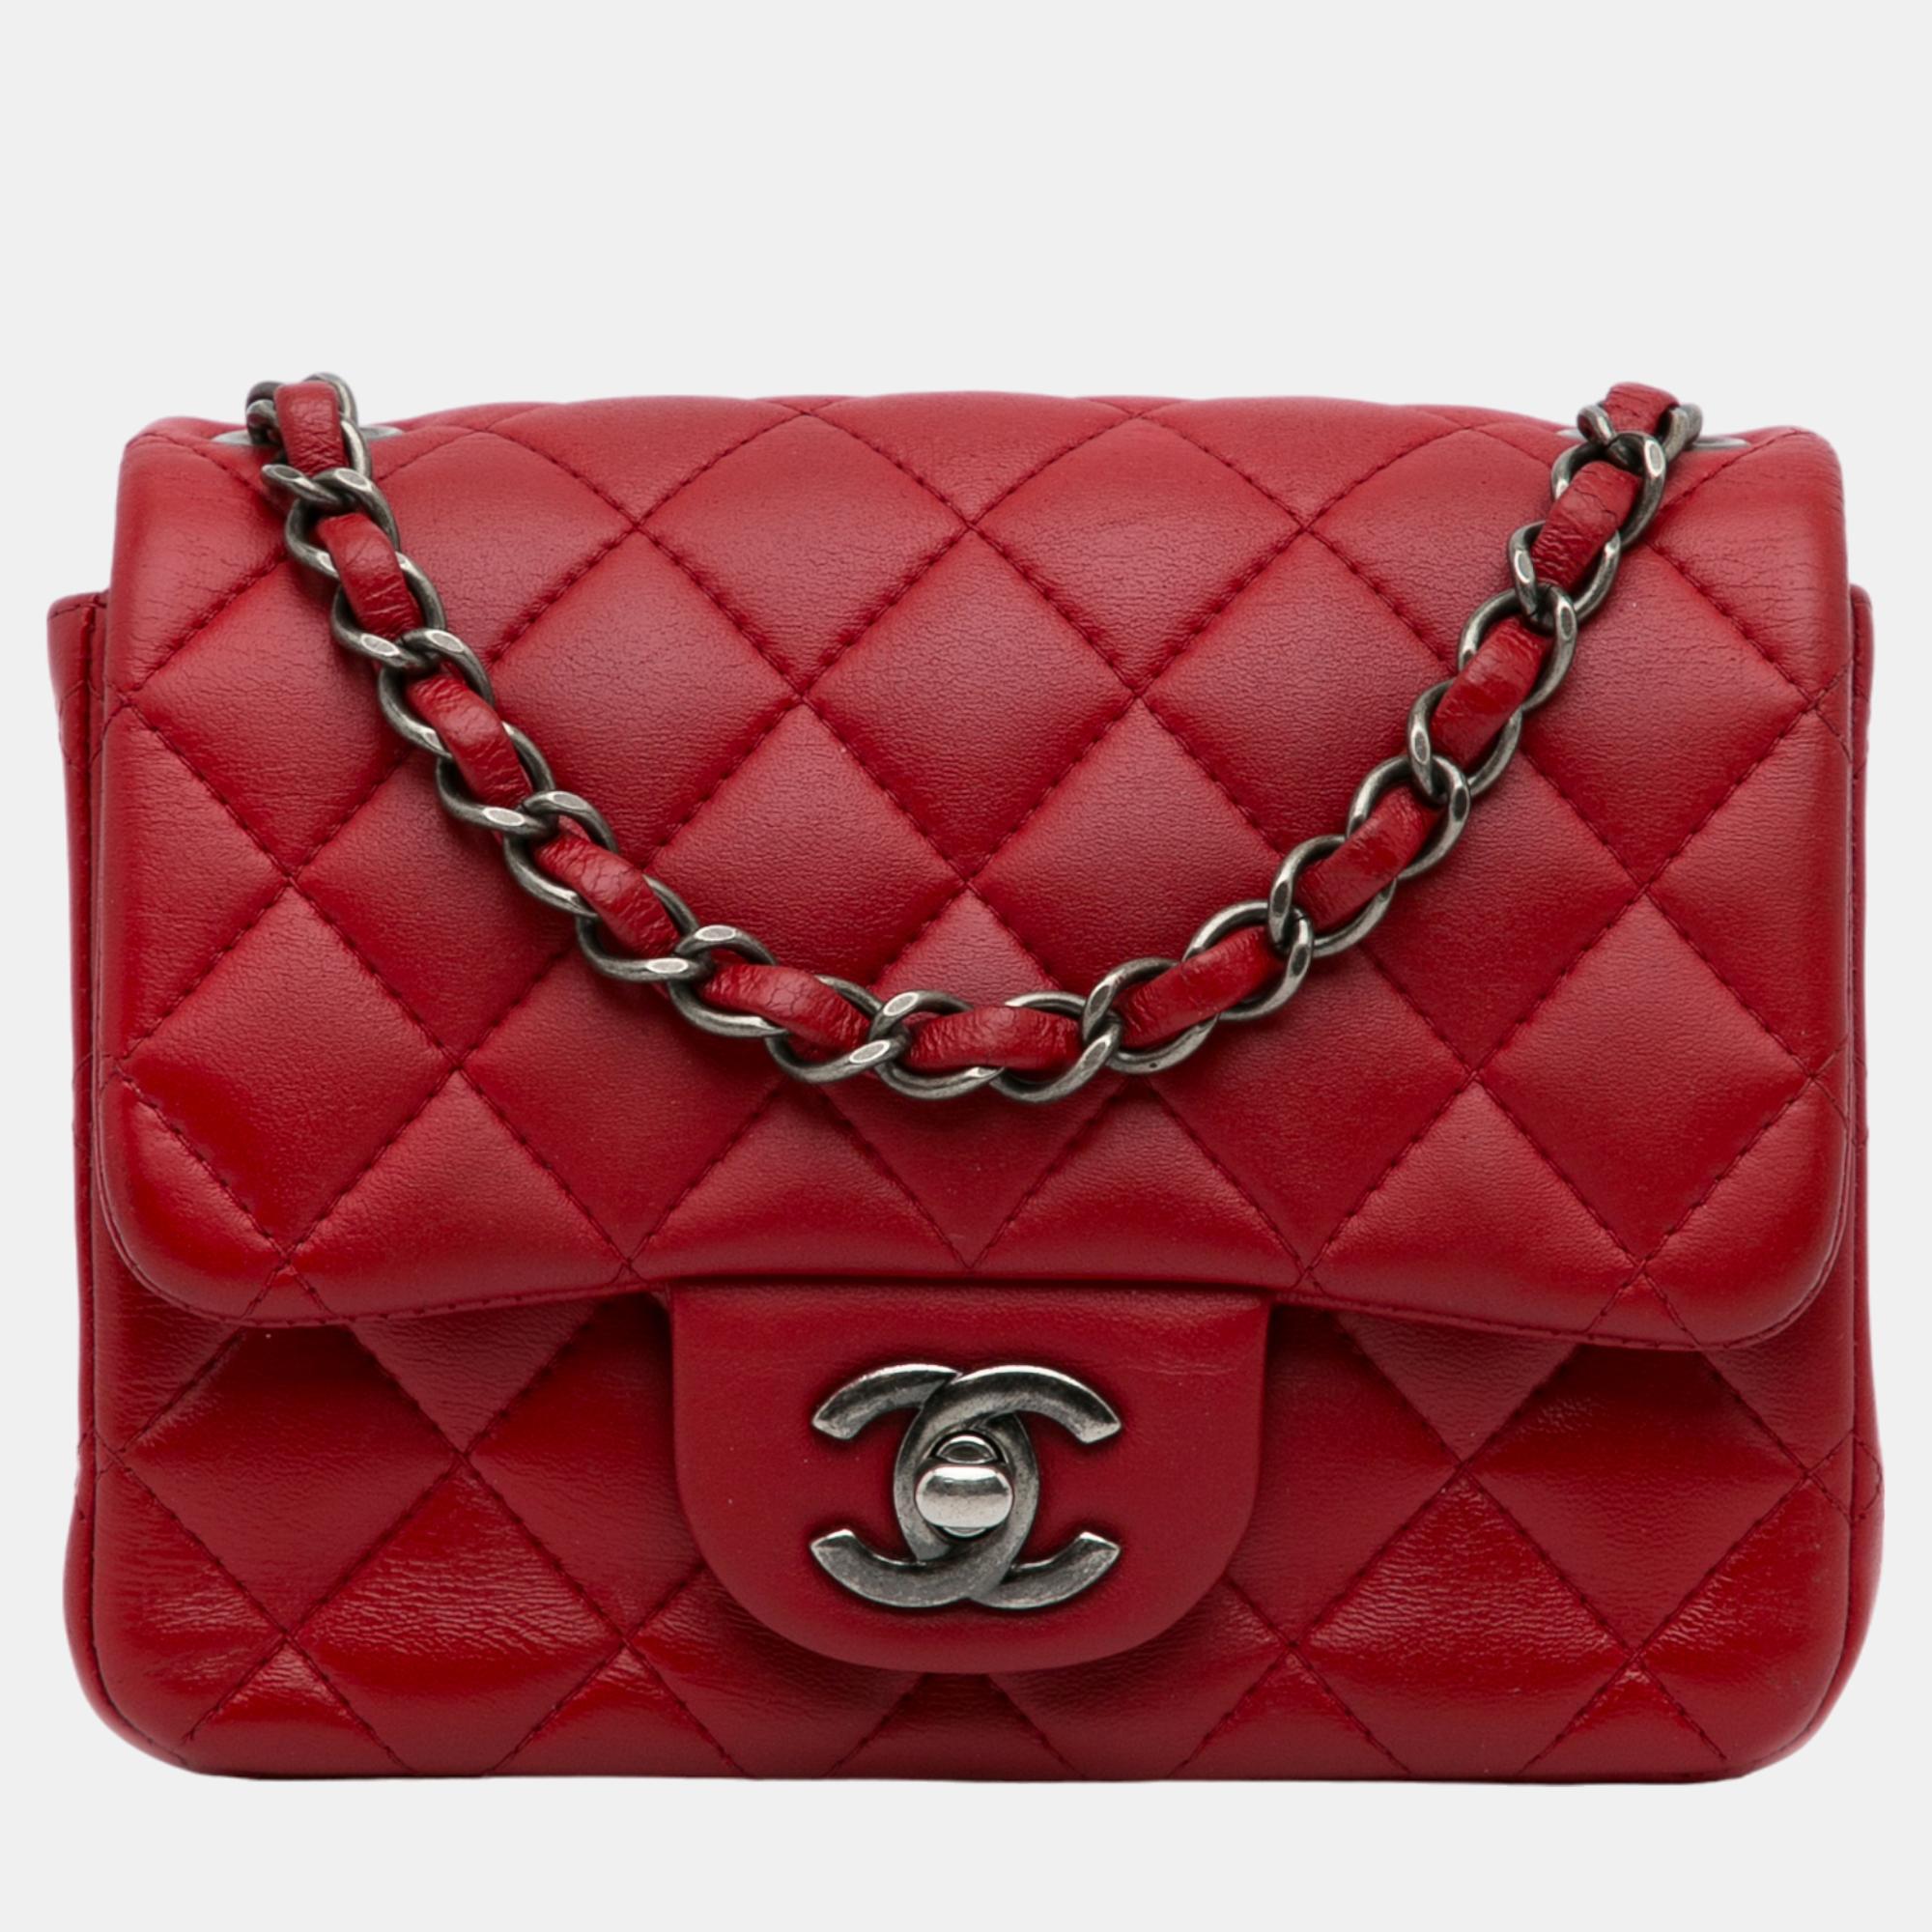 Chanel red mini classic lambskin square flap